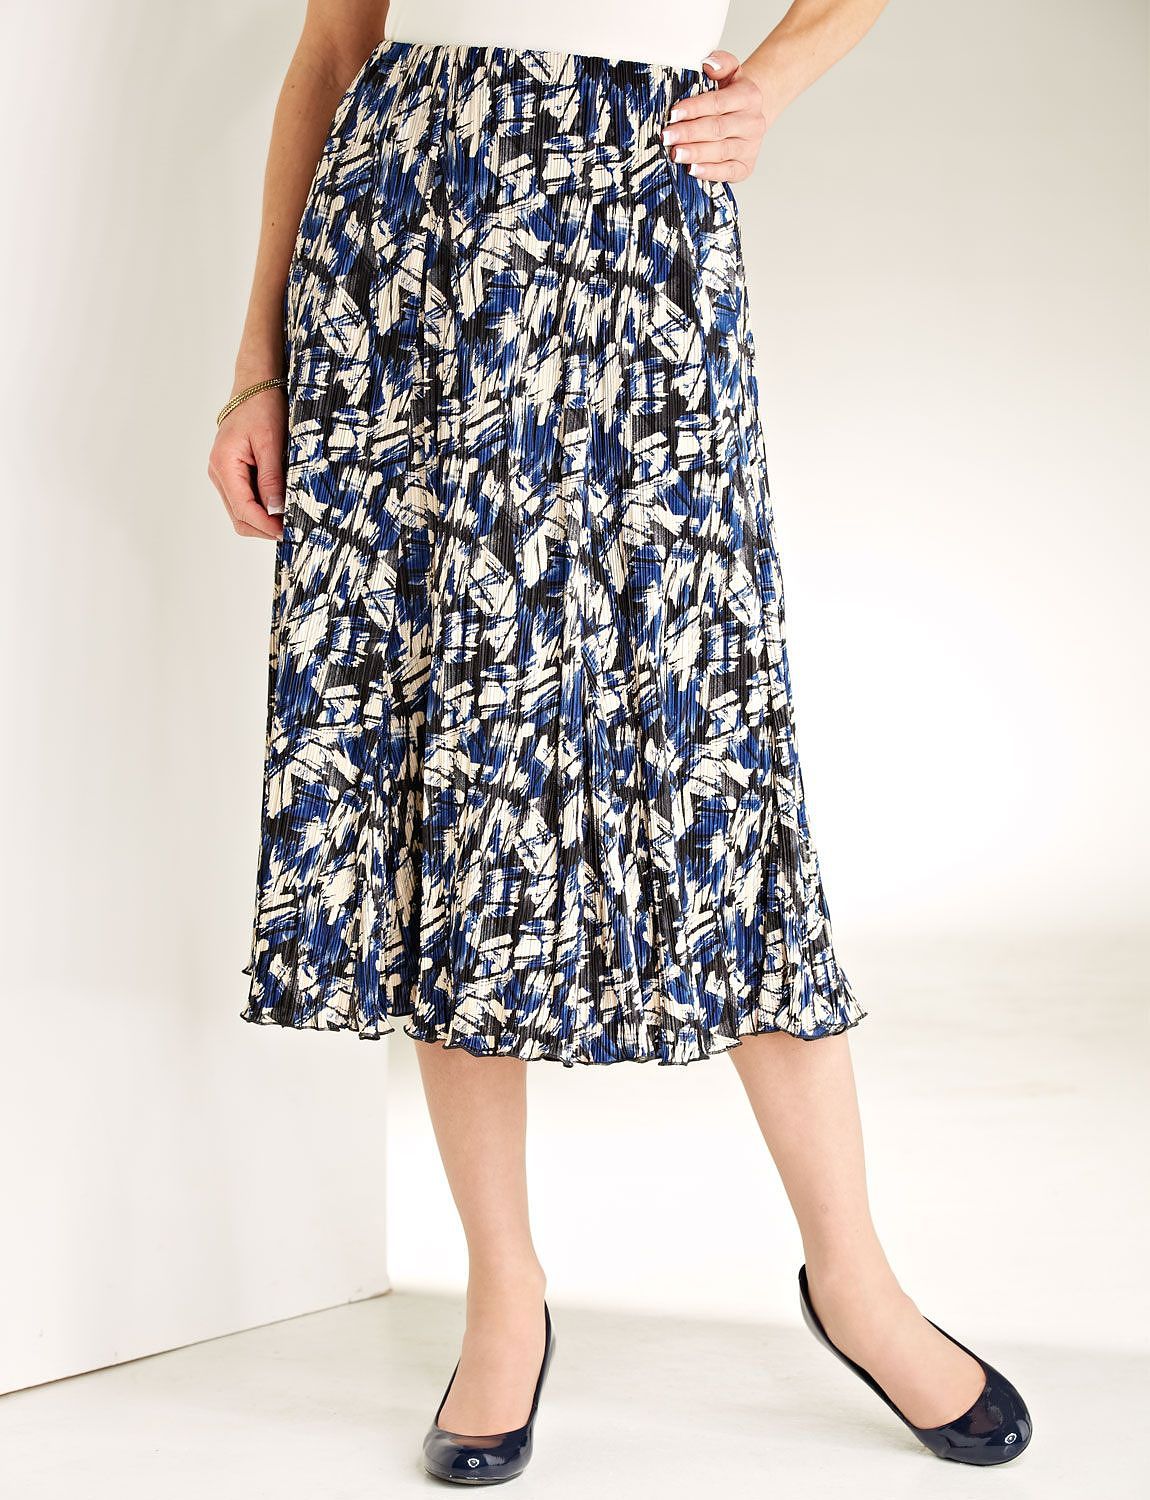 Plisse Skirt 25 Inches - Ladieswear Skirts | Chums